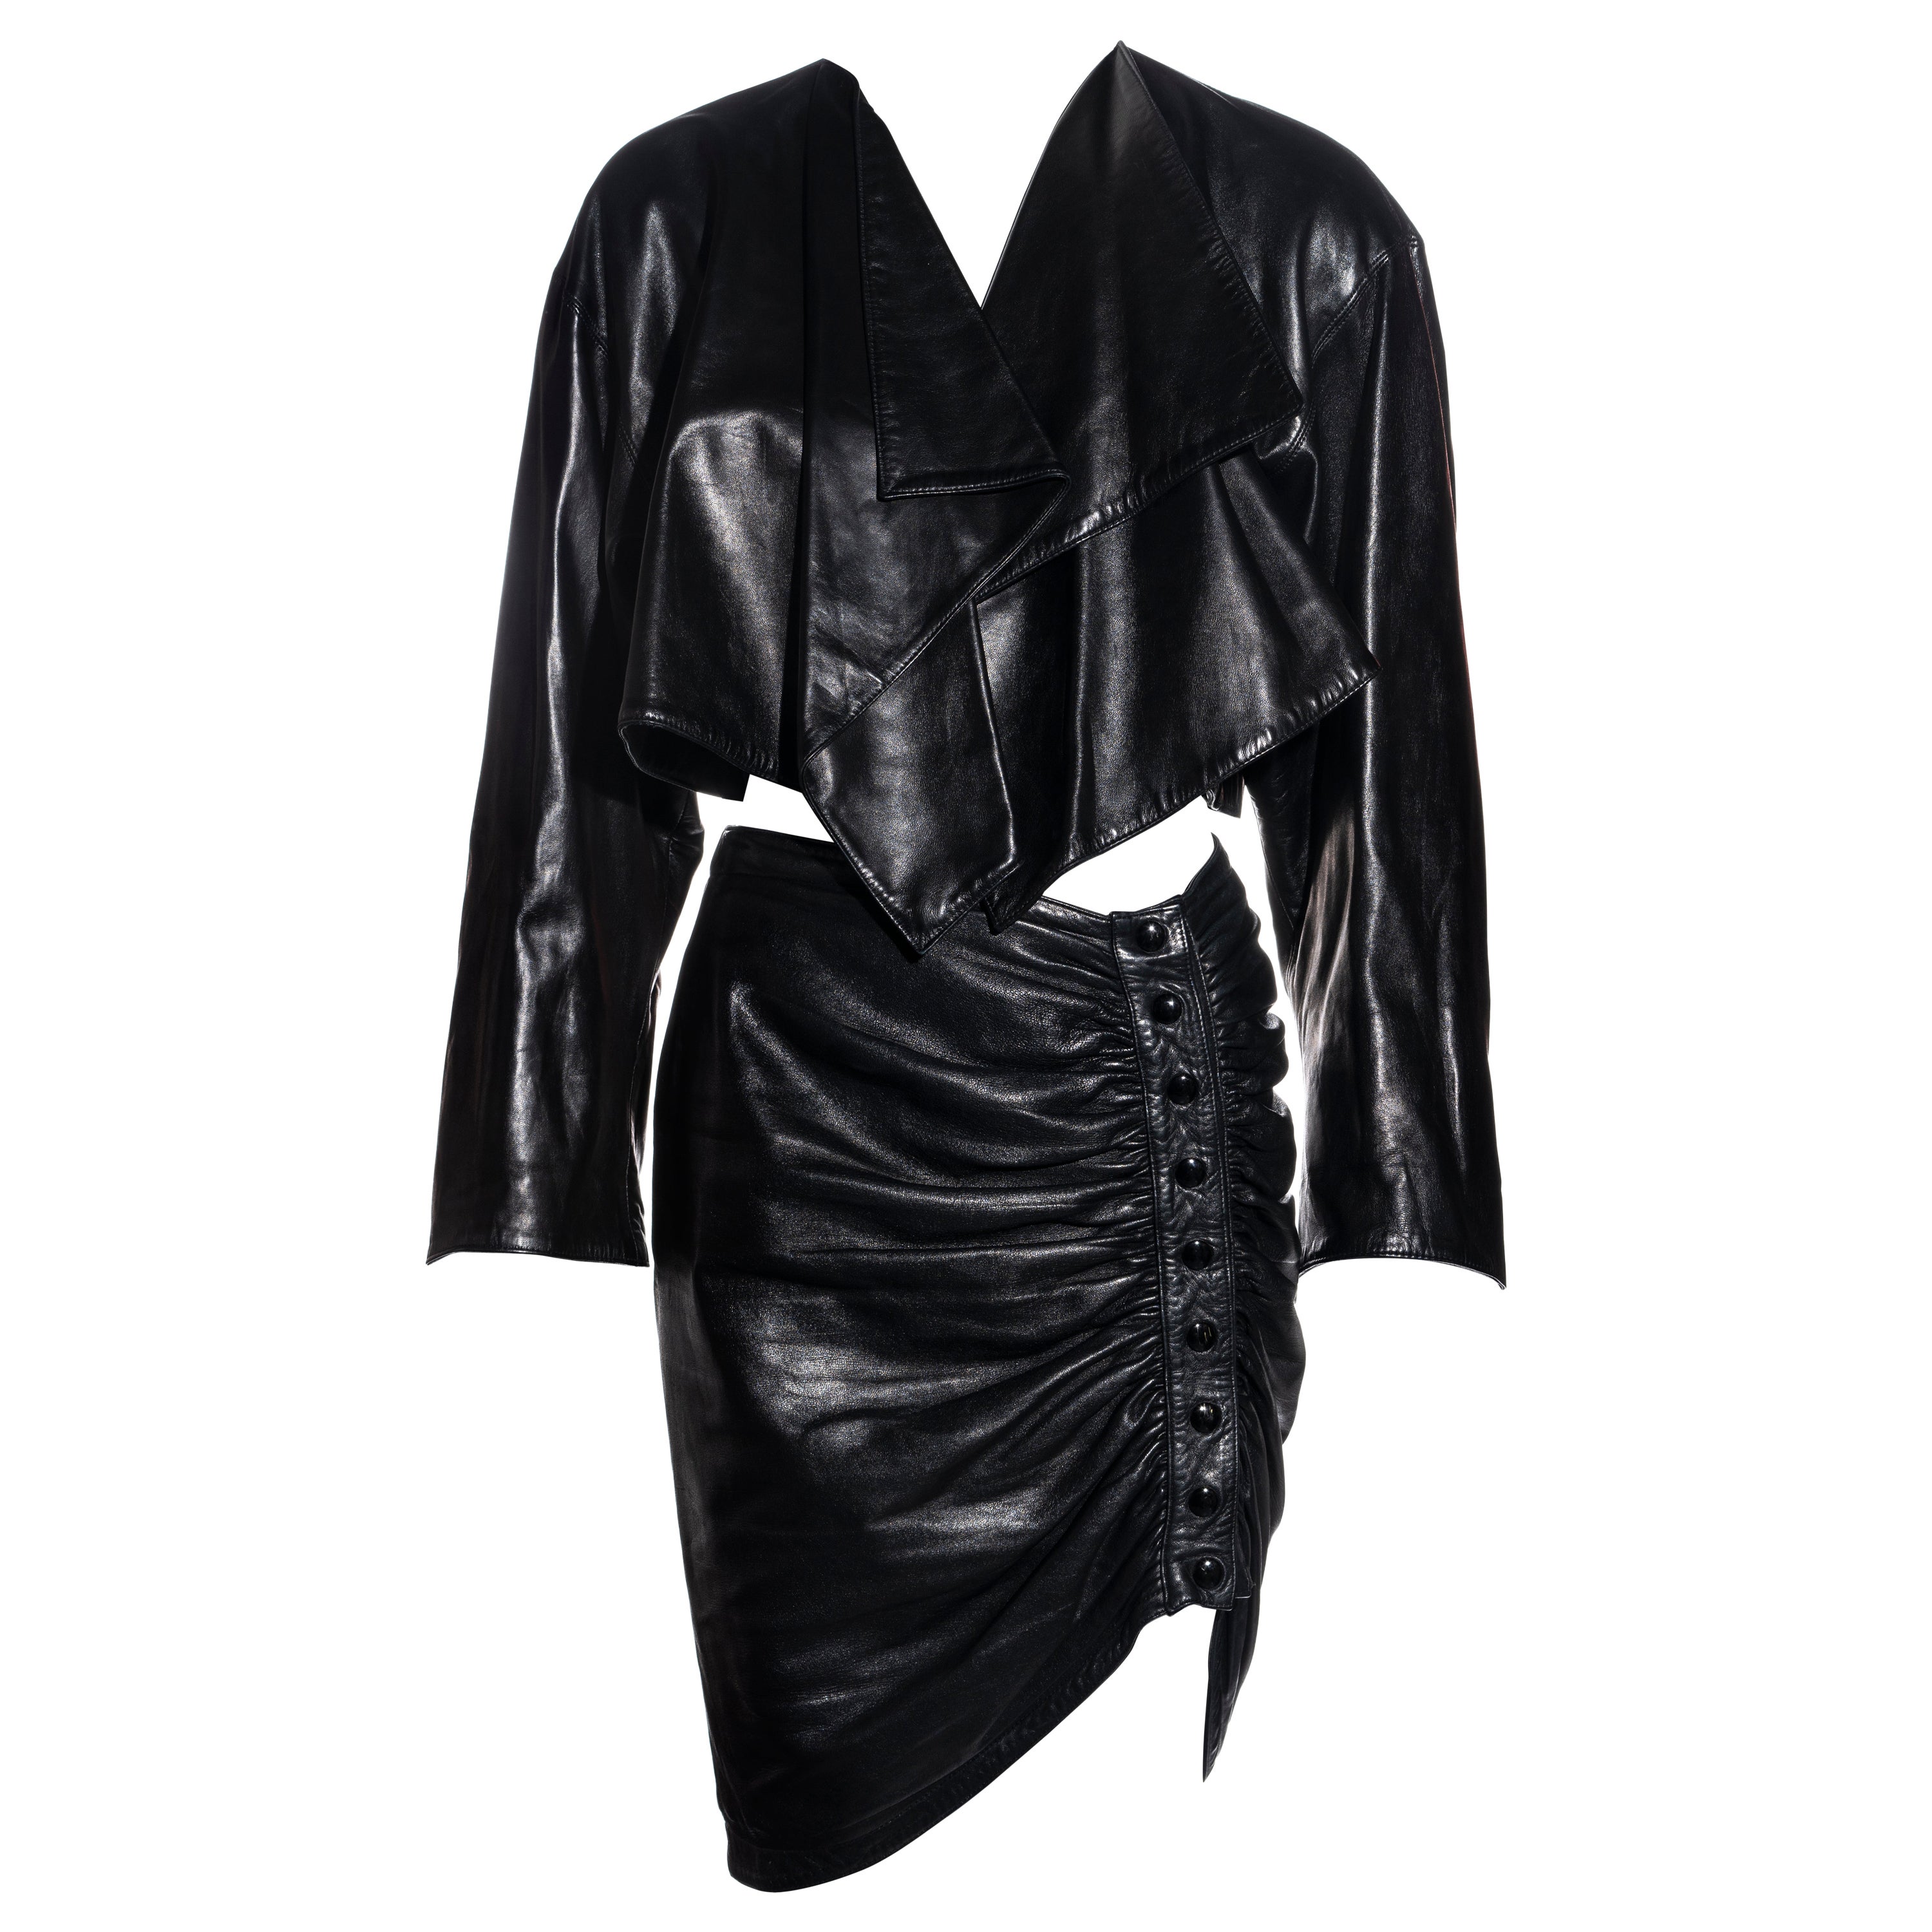 Azzedine Alaia black leather jacket and skirt set, fw 1983